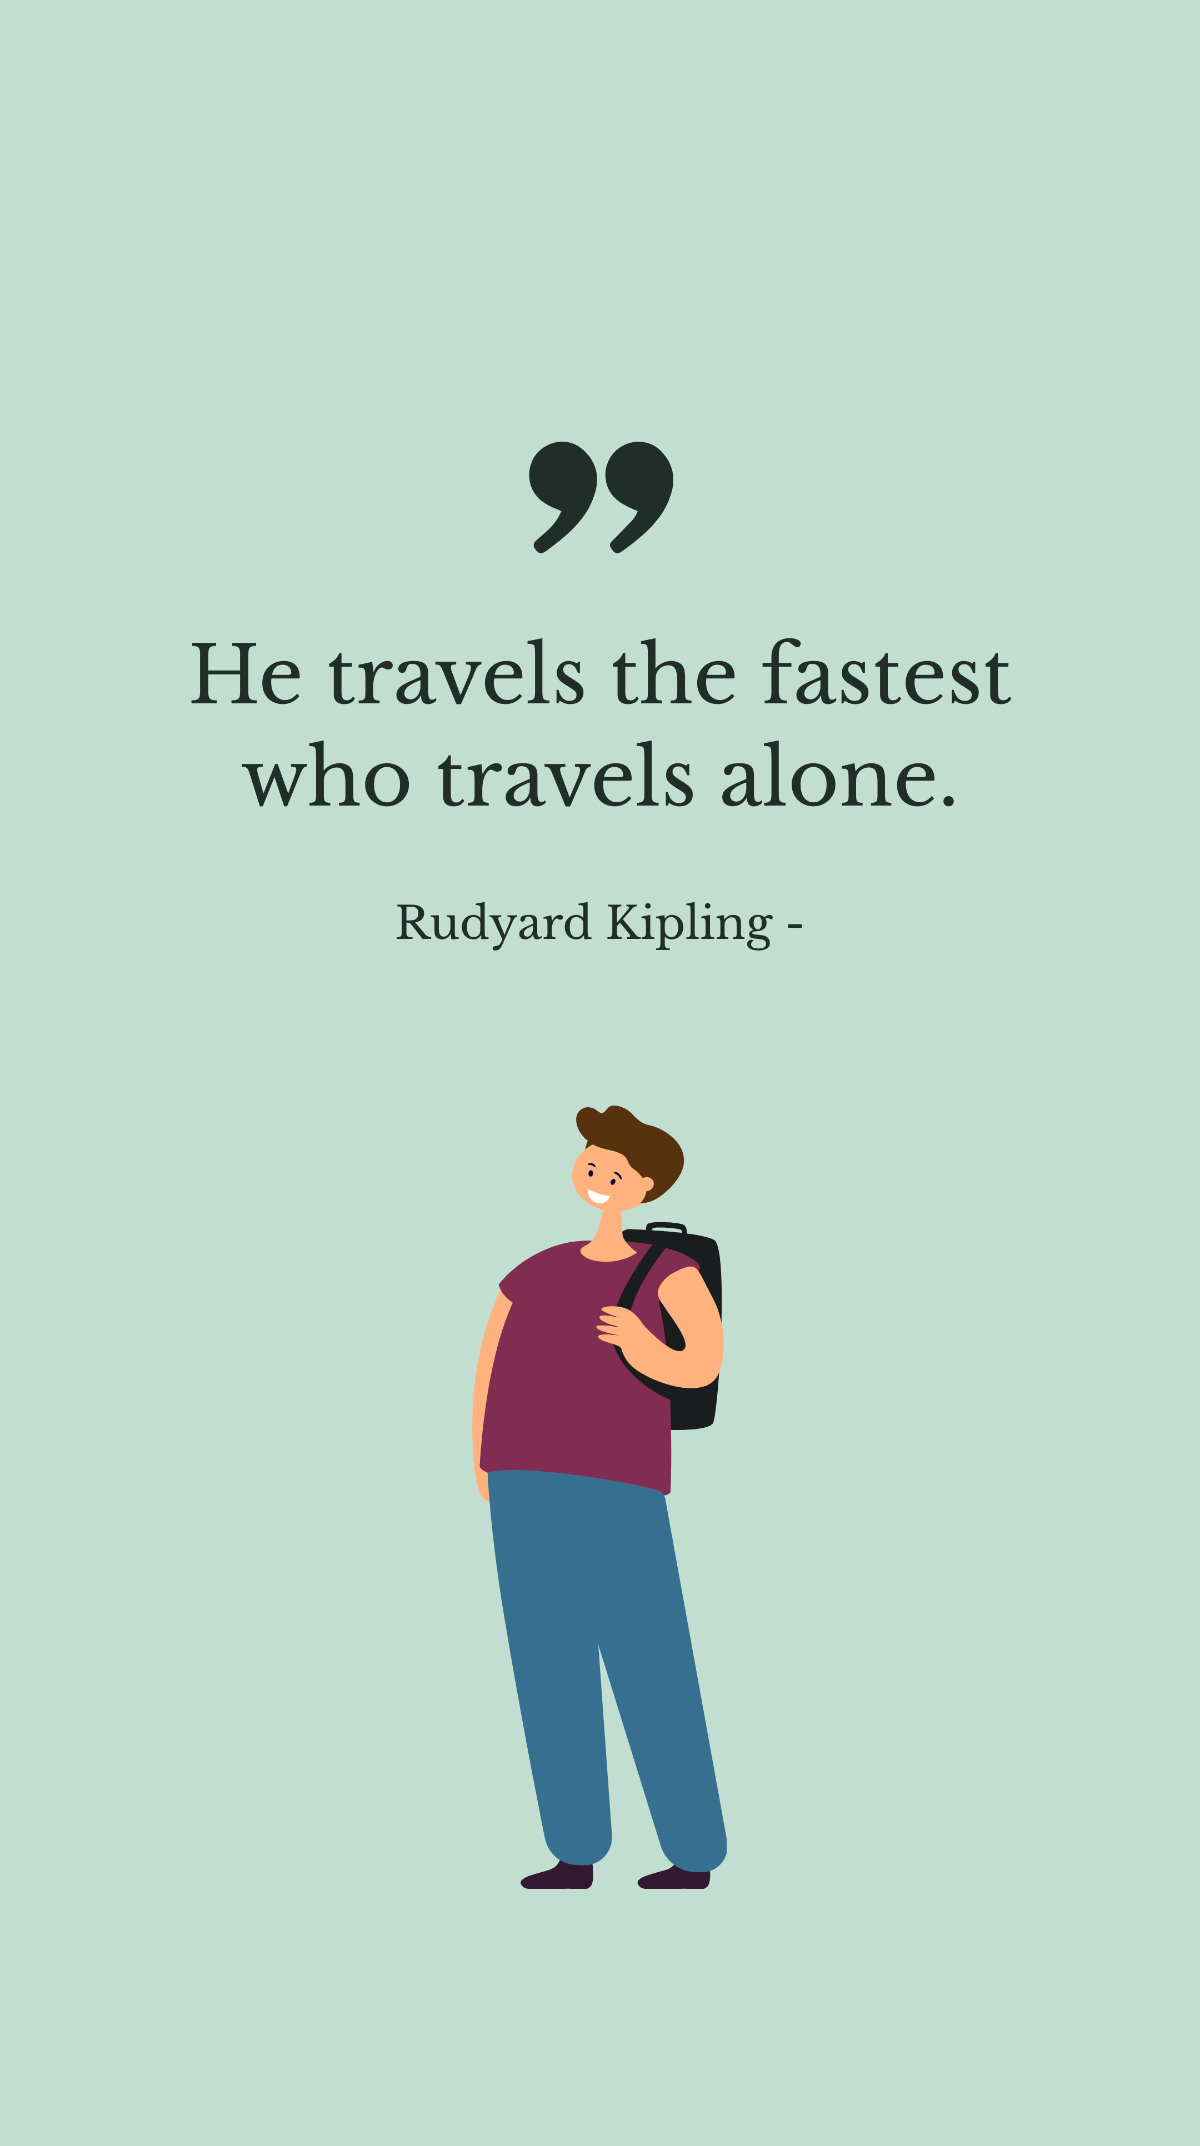 Rudyard Kipling - He travels the fastest who travels alone.